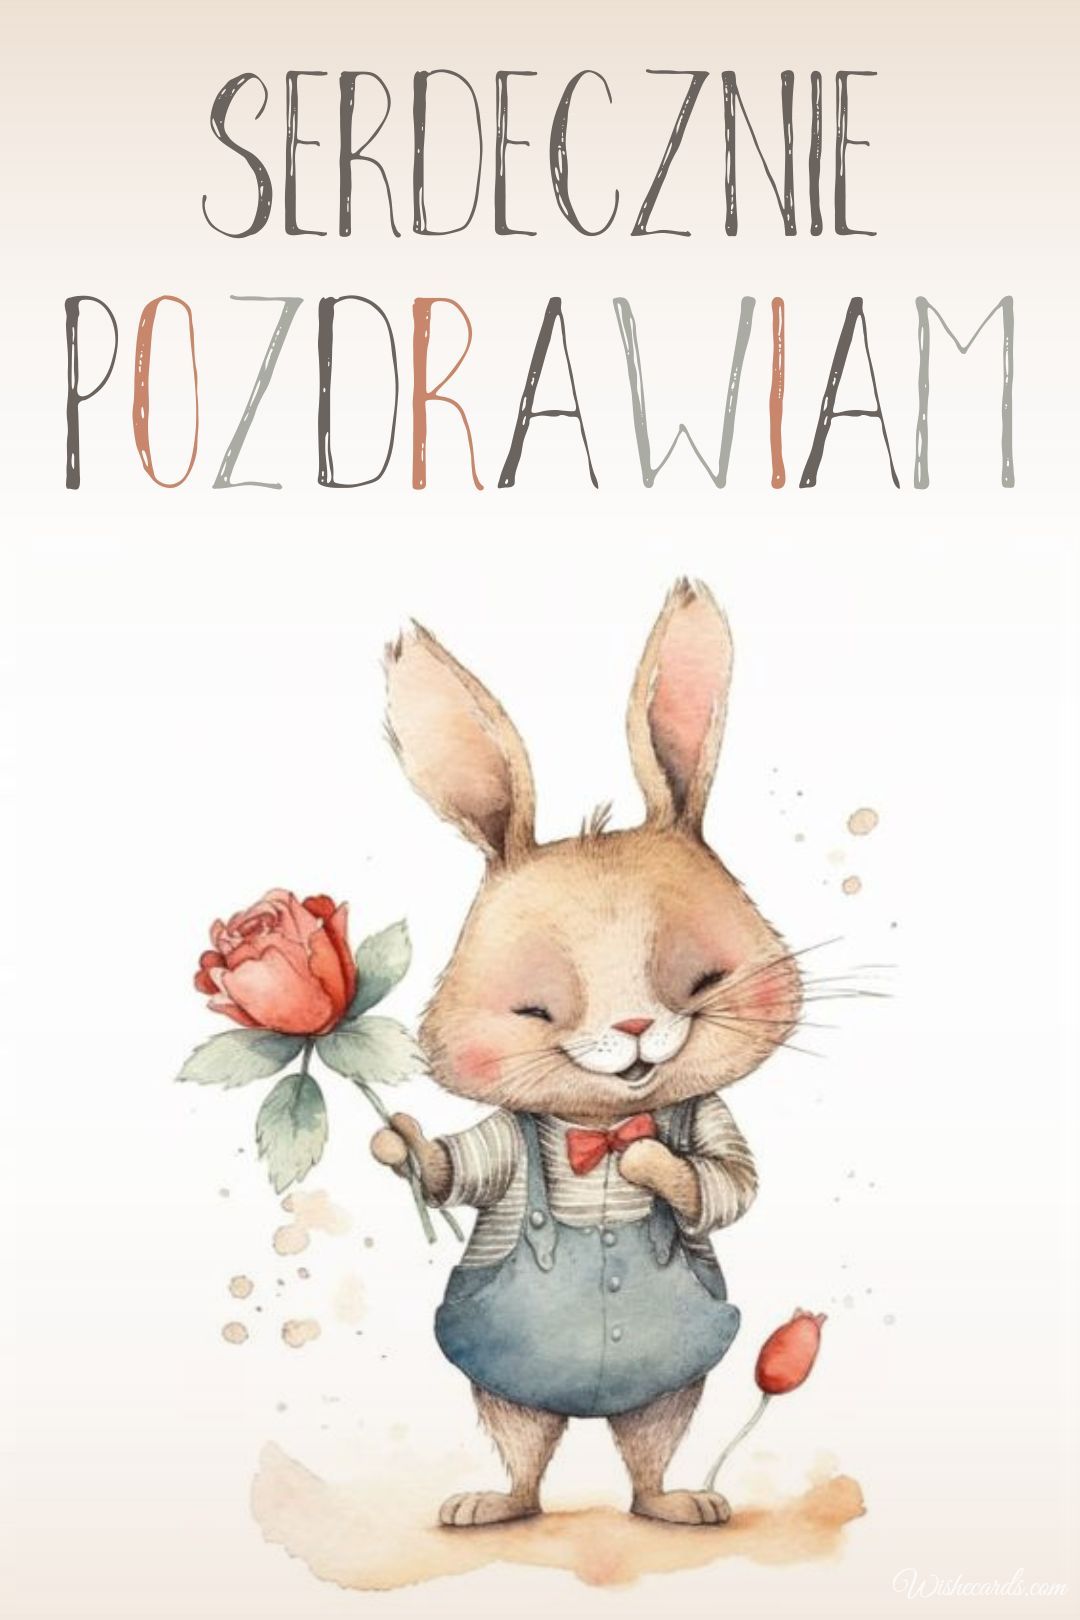 Birthday Image in Polish for Kids